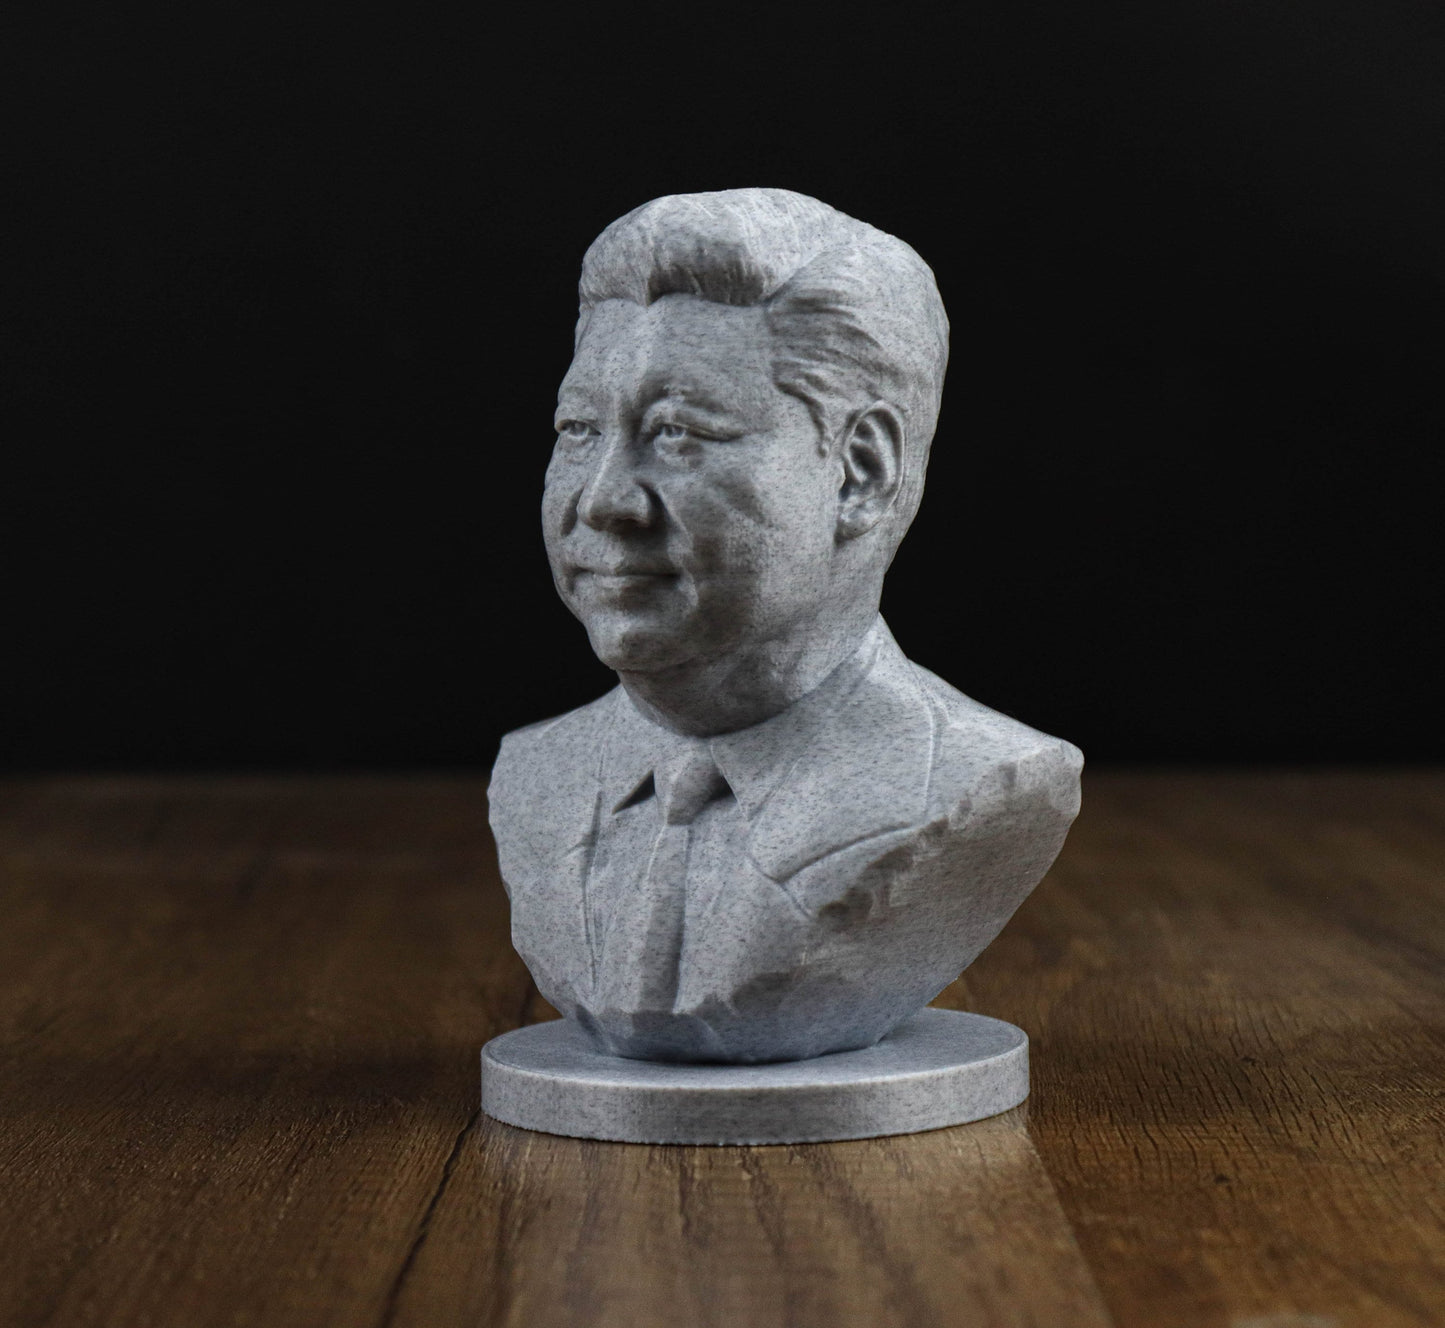 Xi Jinping Bust, China's President Sculpture